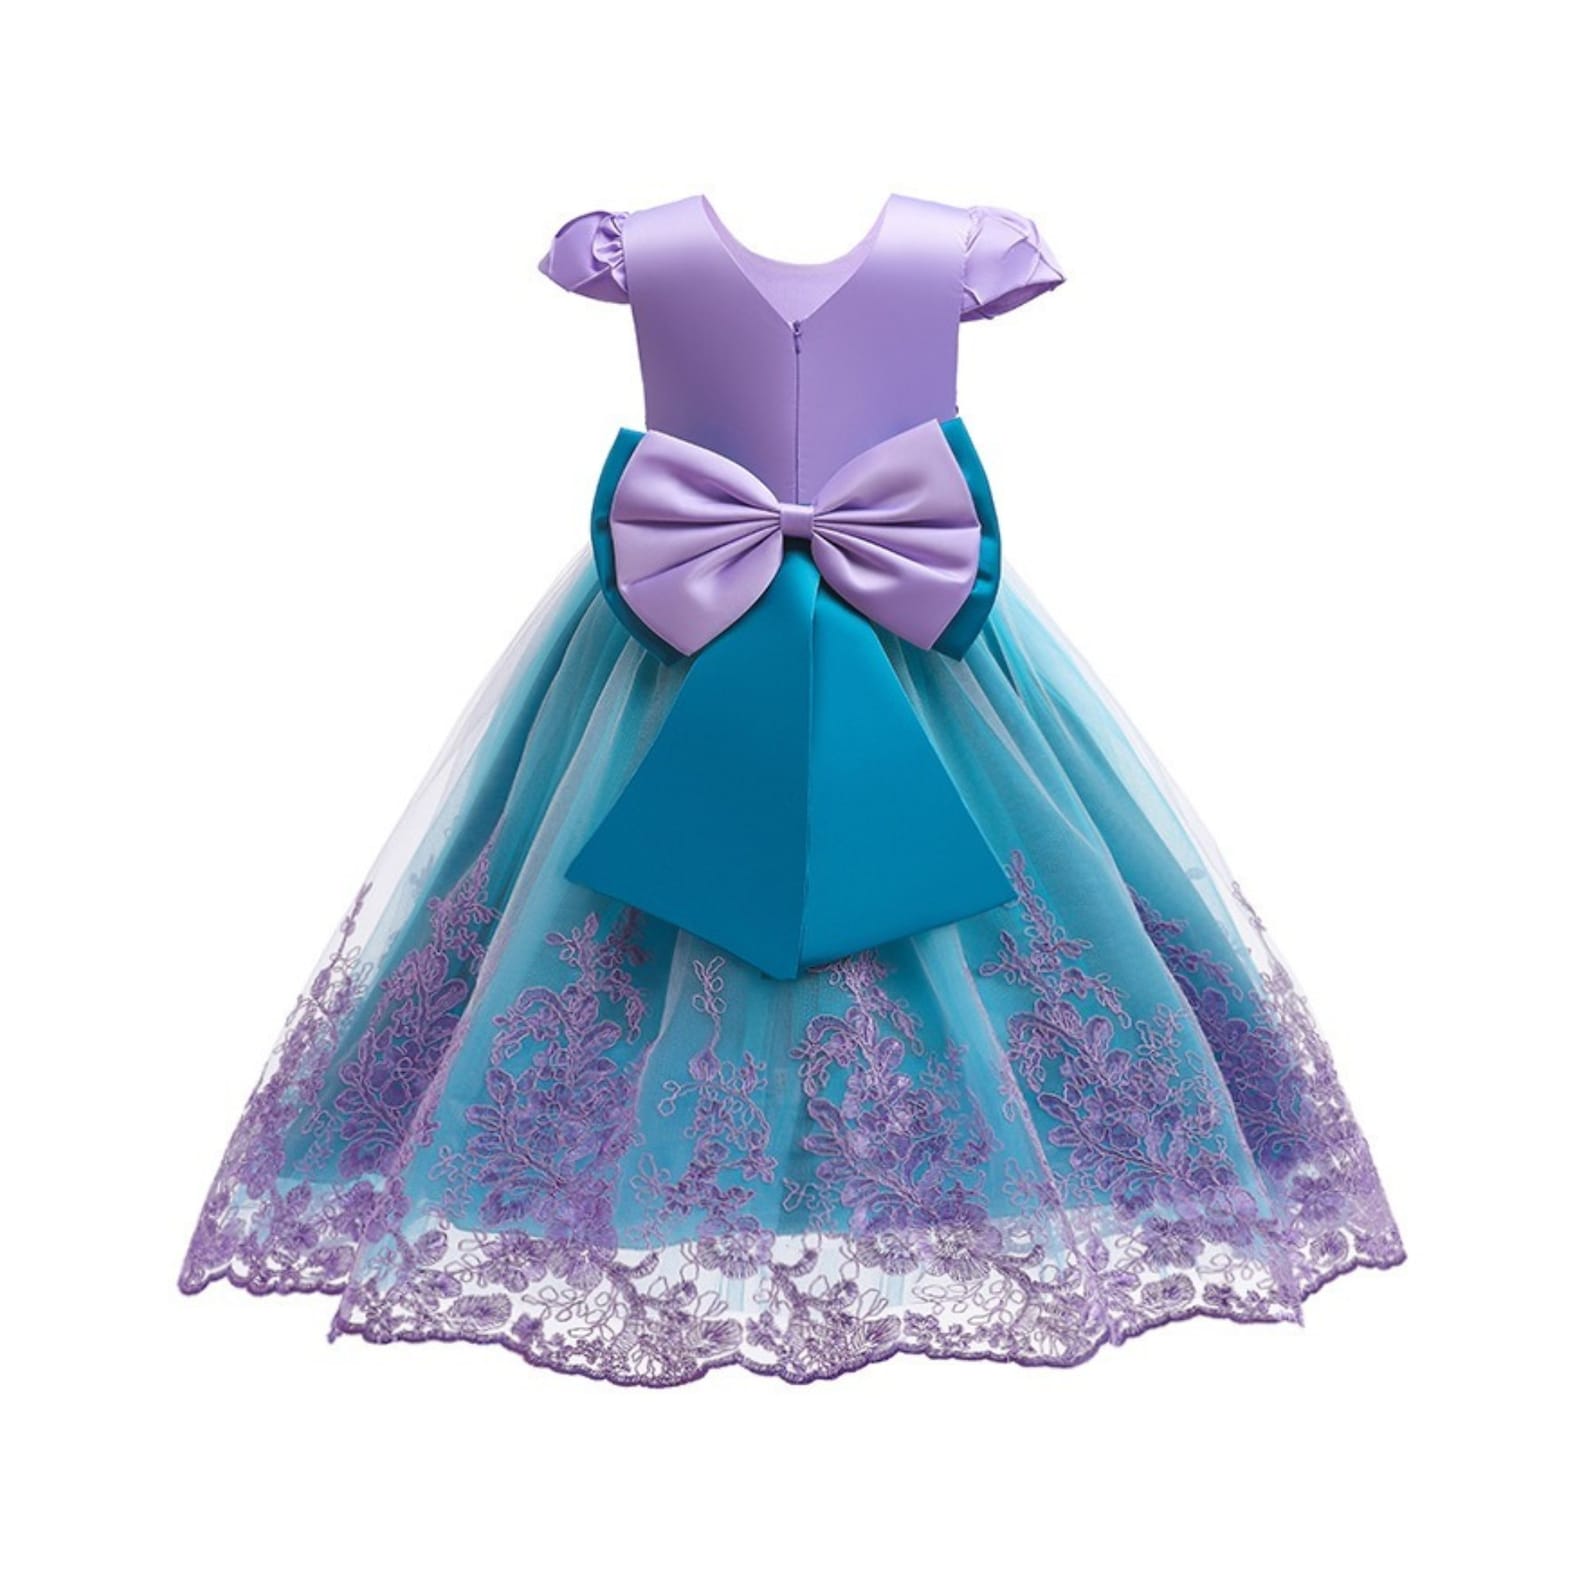 Little Mermaid Ariel dress - The ultimate Disney Inspired Costume